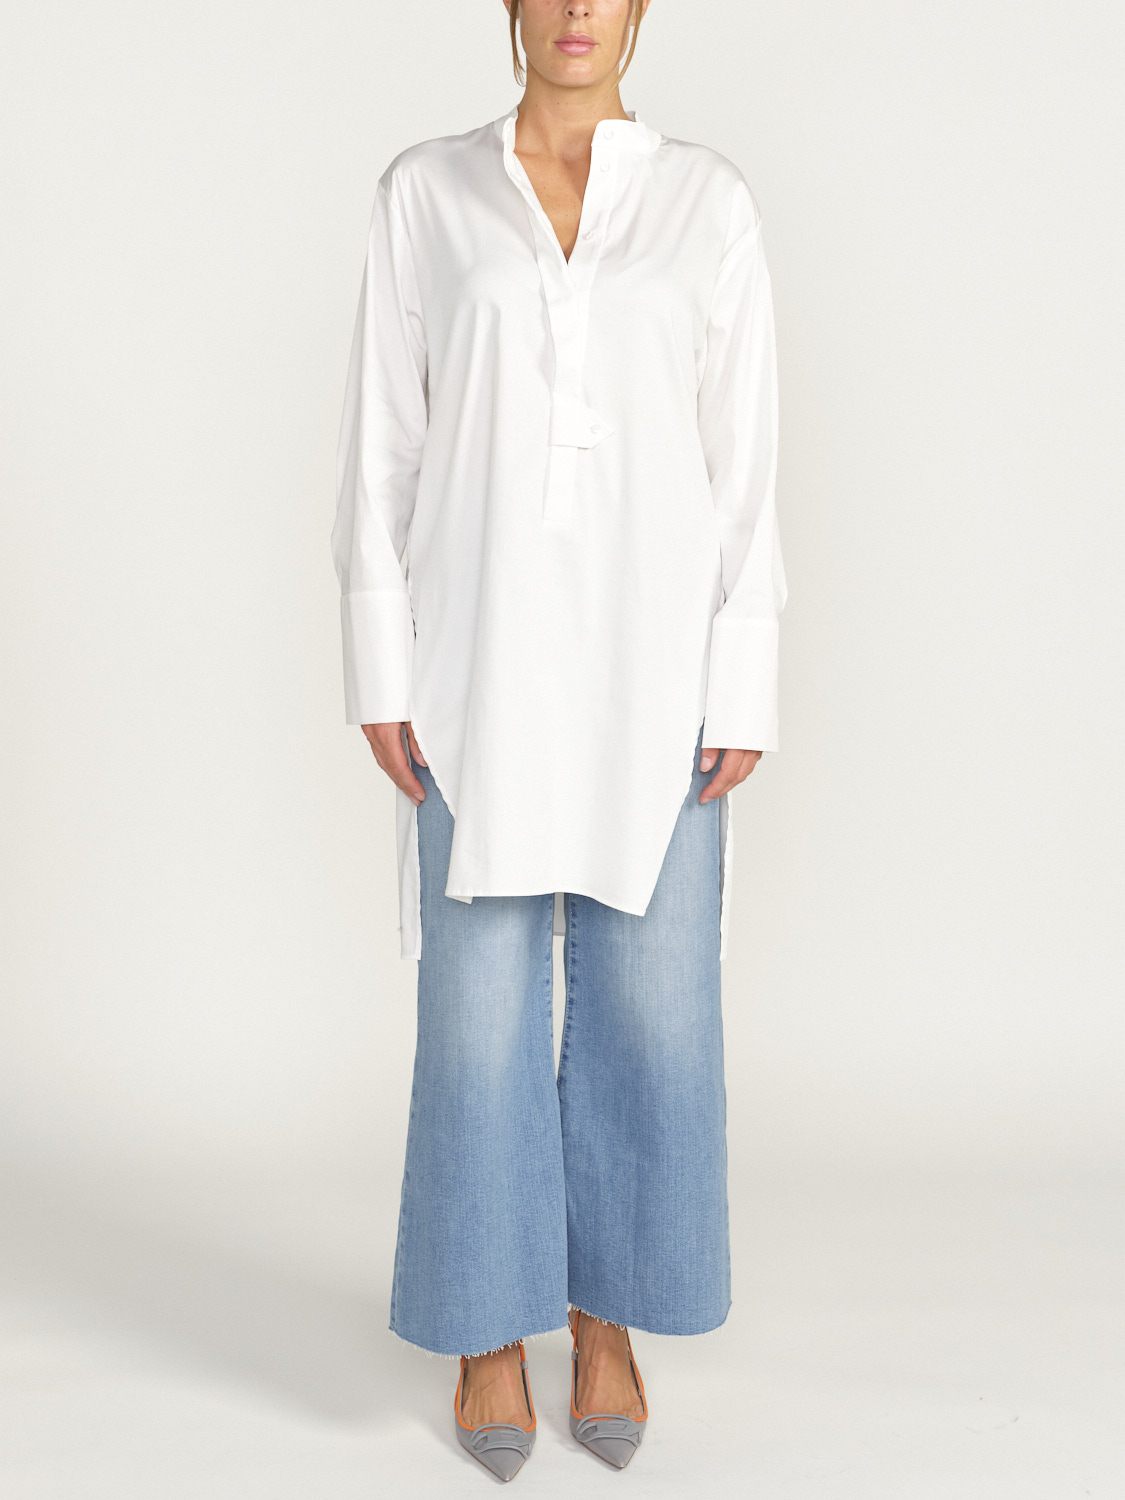 Eva Mann Margit – long blouse with half button placket   white 36